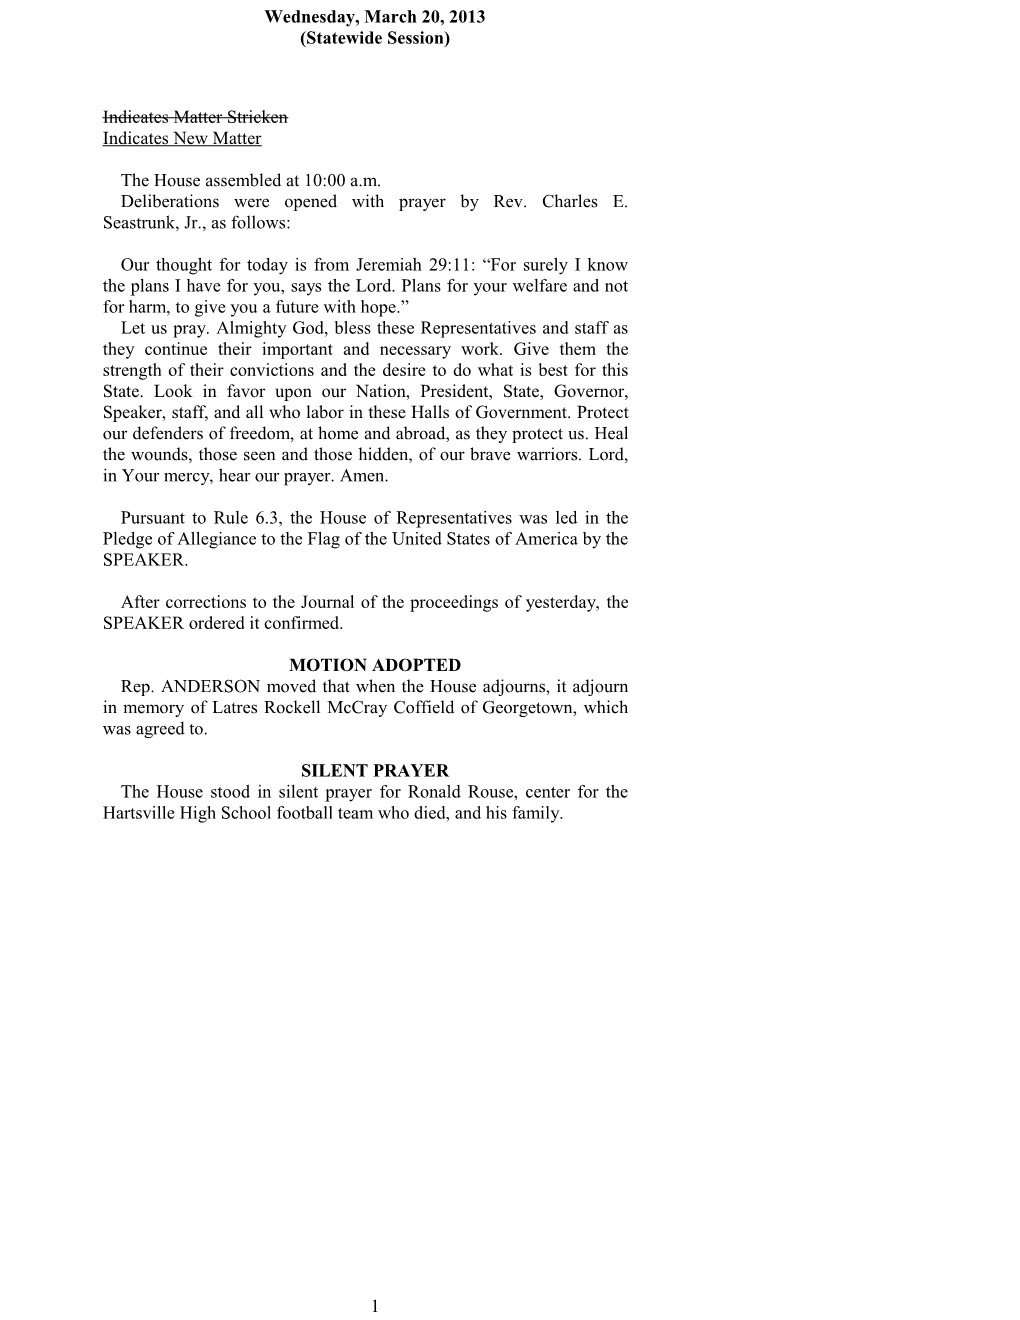 House Journal for Mar. 20, 2013 - South Carolina Legislature Online